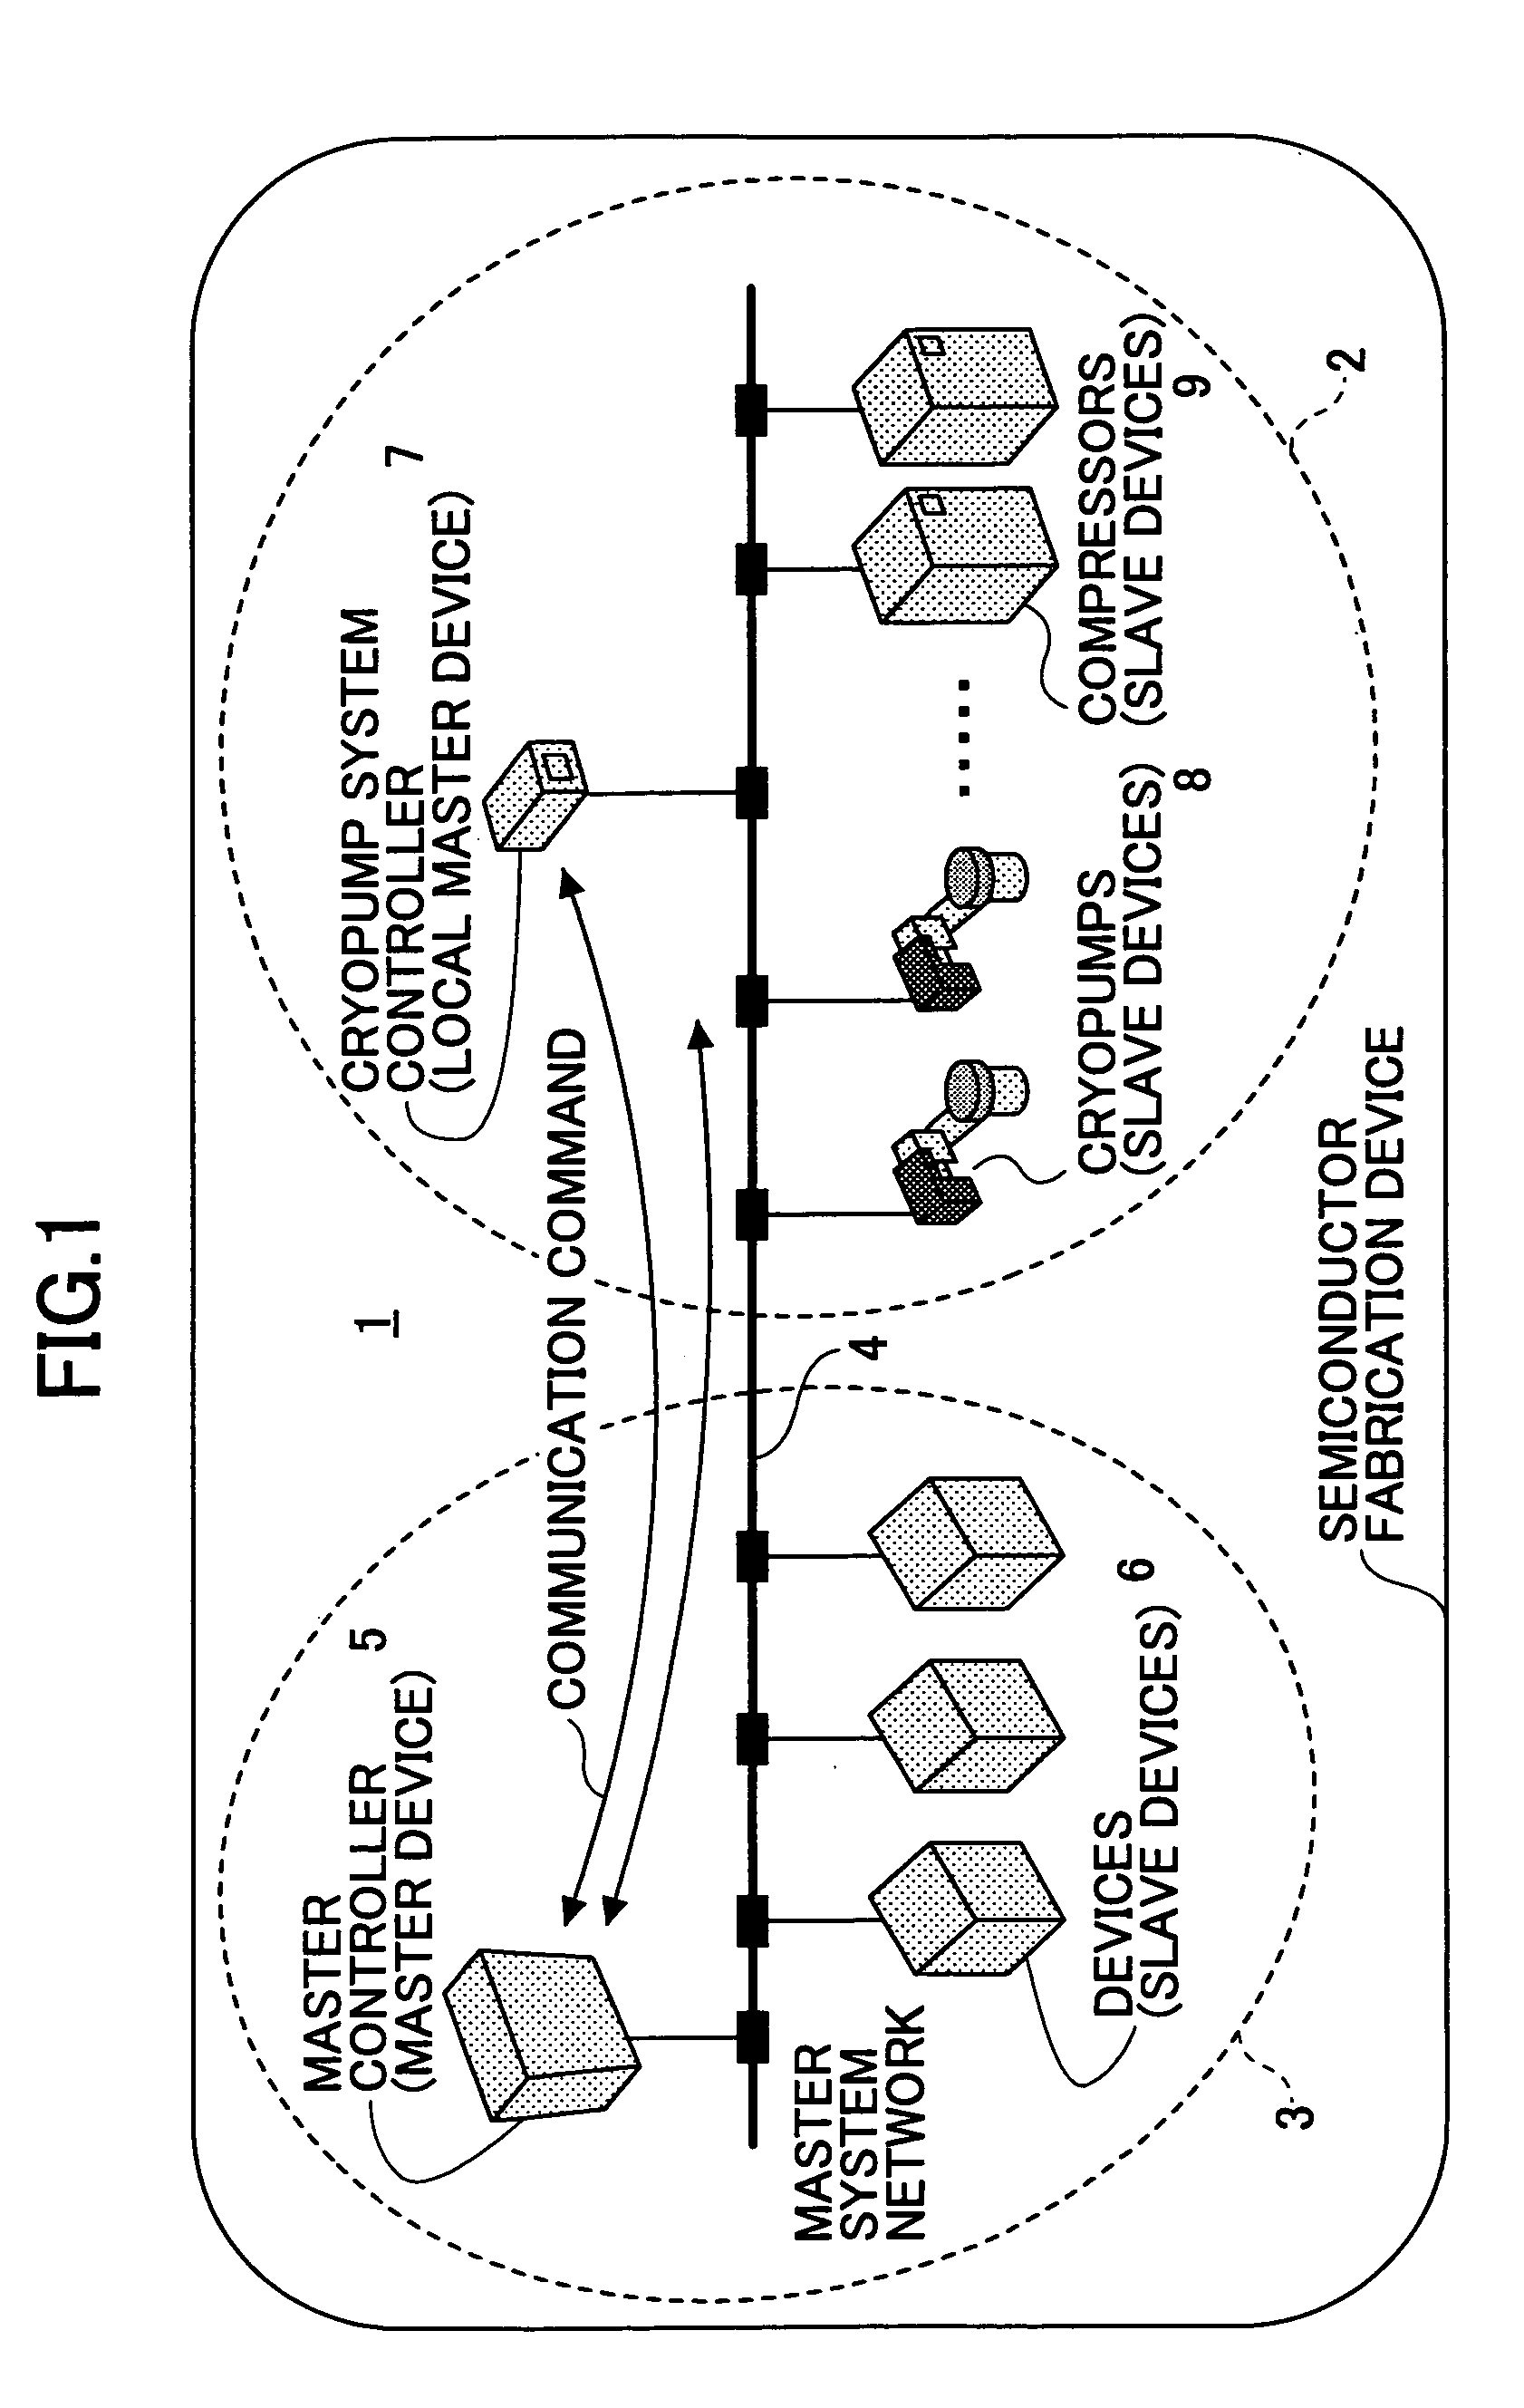 Communication network system